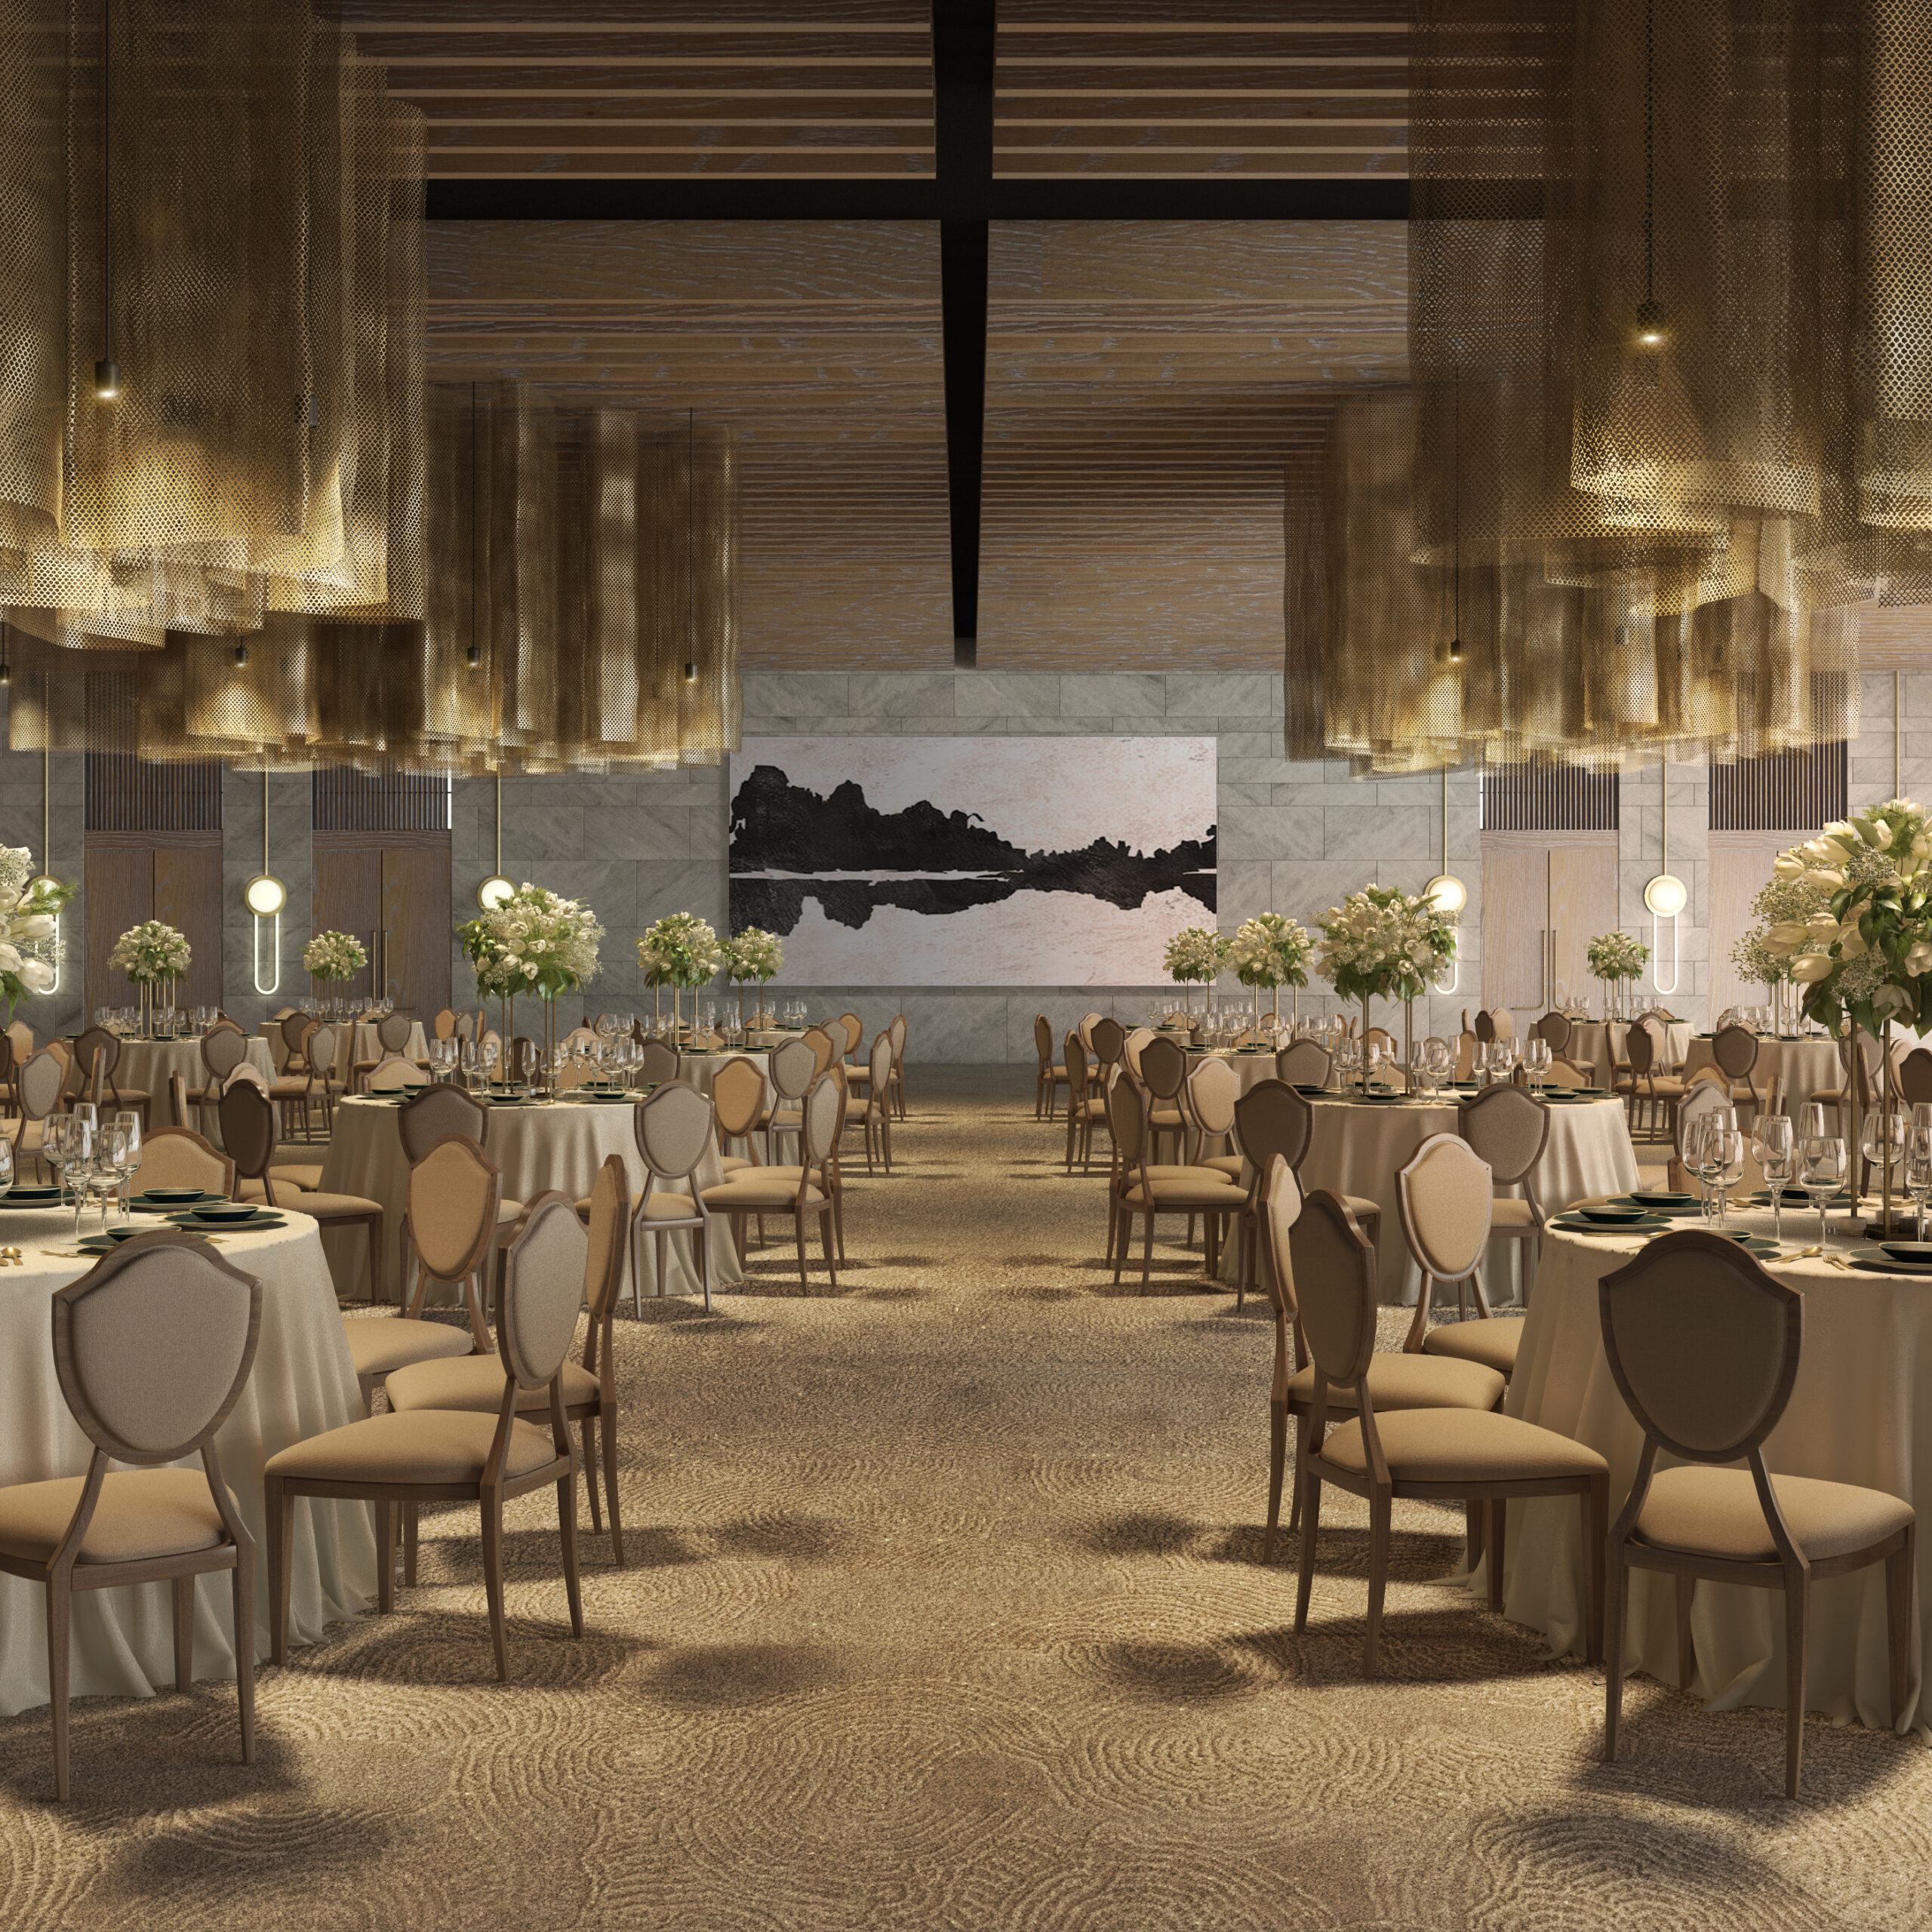 Vietnamese Ballroom + Steakhouse Concept